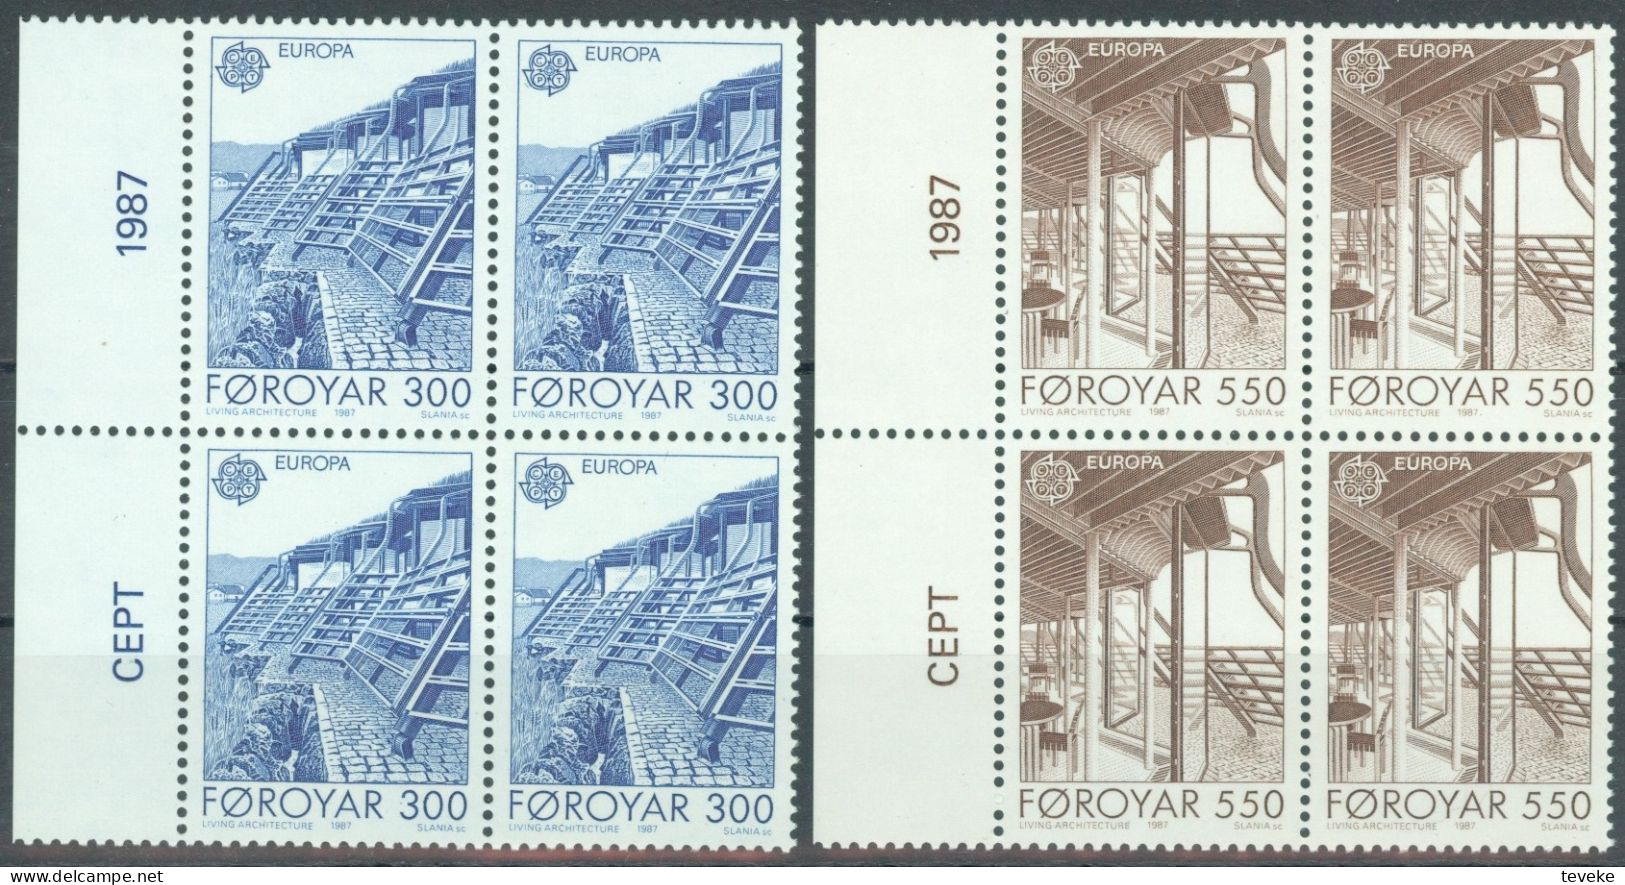 FAEROËR 1987 - MiNr. 149/150 BL4 - **/MNH - Europa/CEPT - Modern Architecture - Färöer Inseln